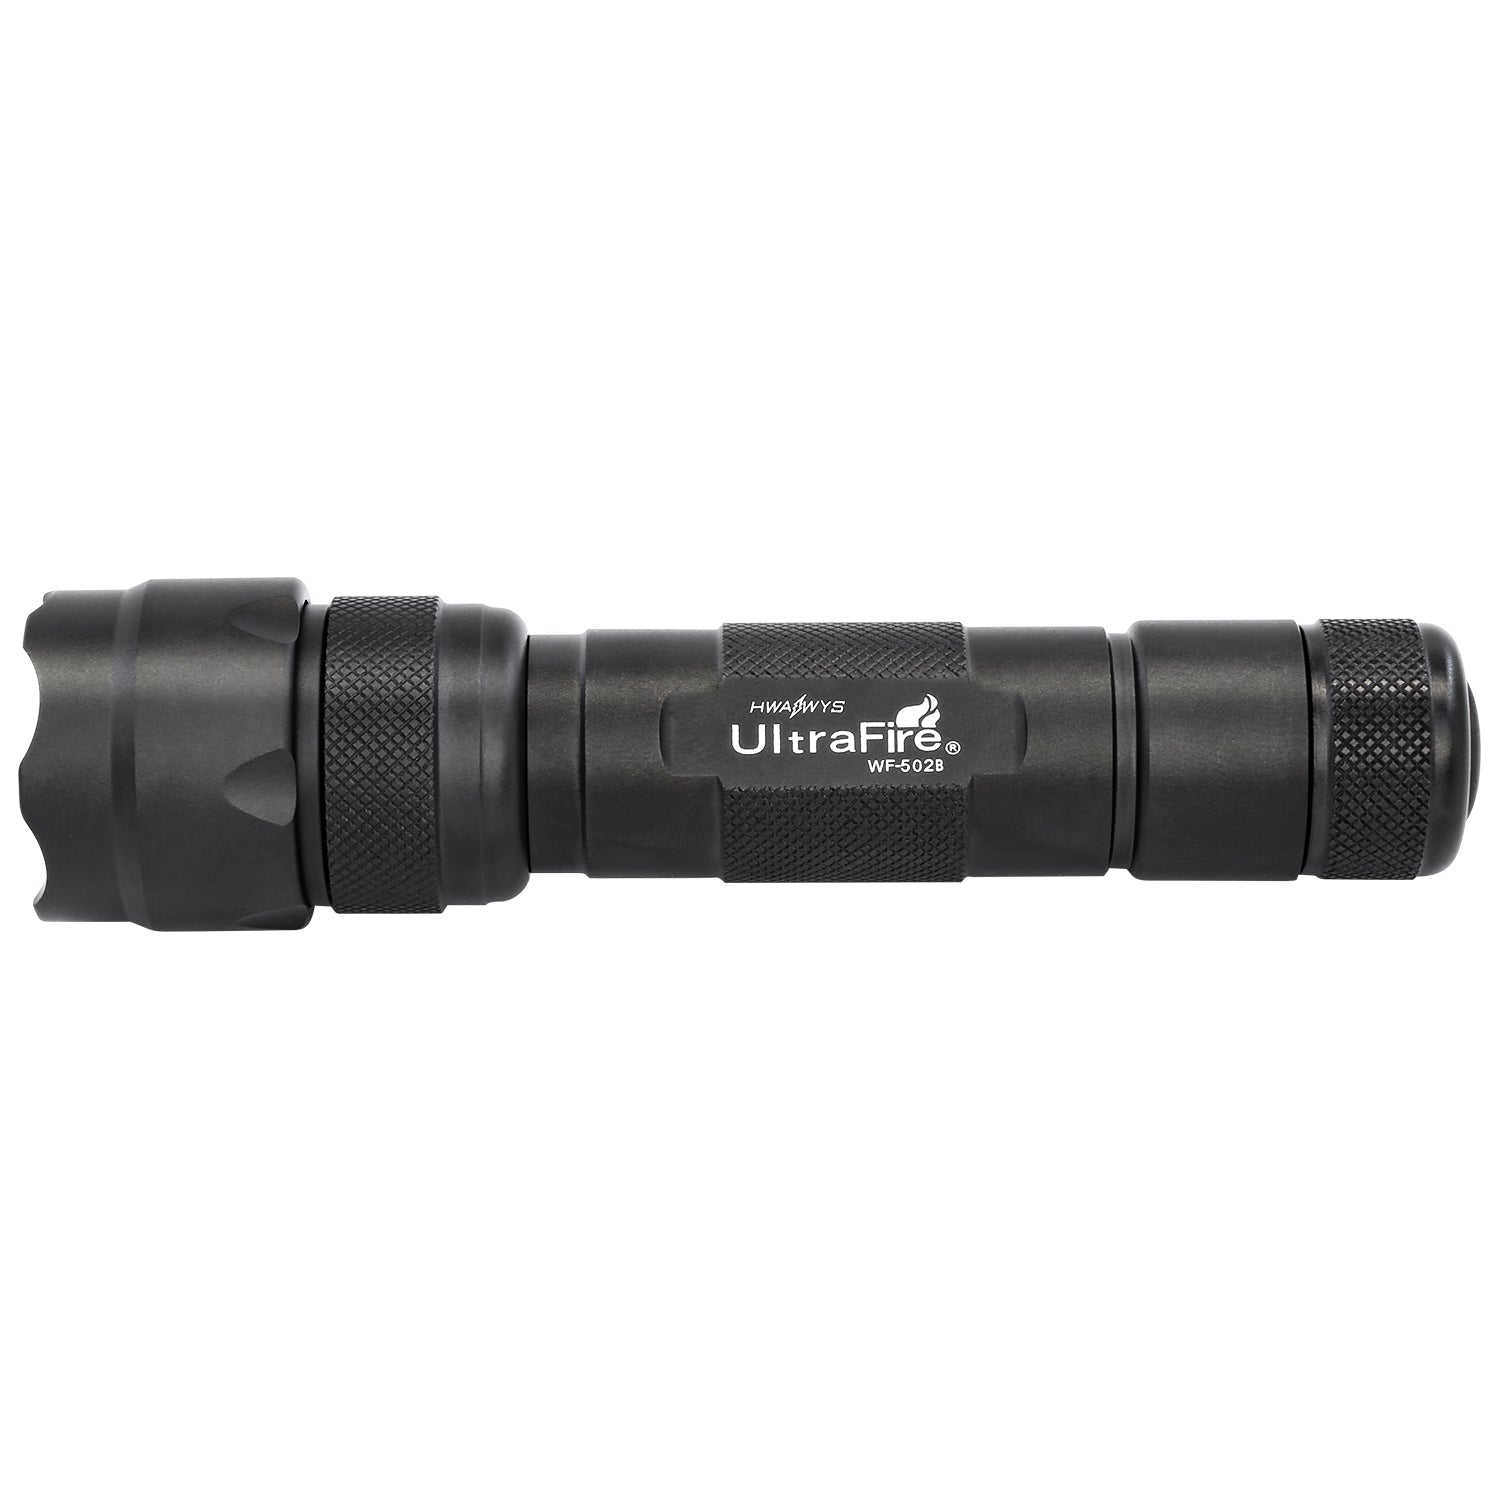 UltraFire Classic WF-502 Flashlight